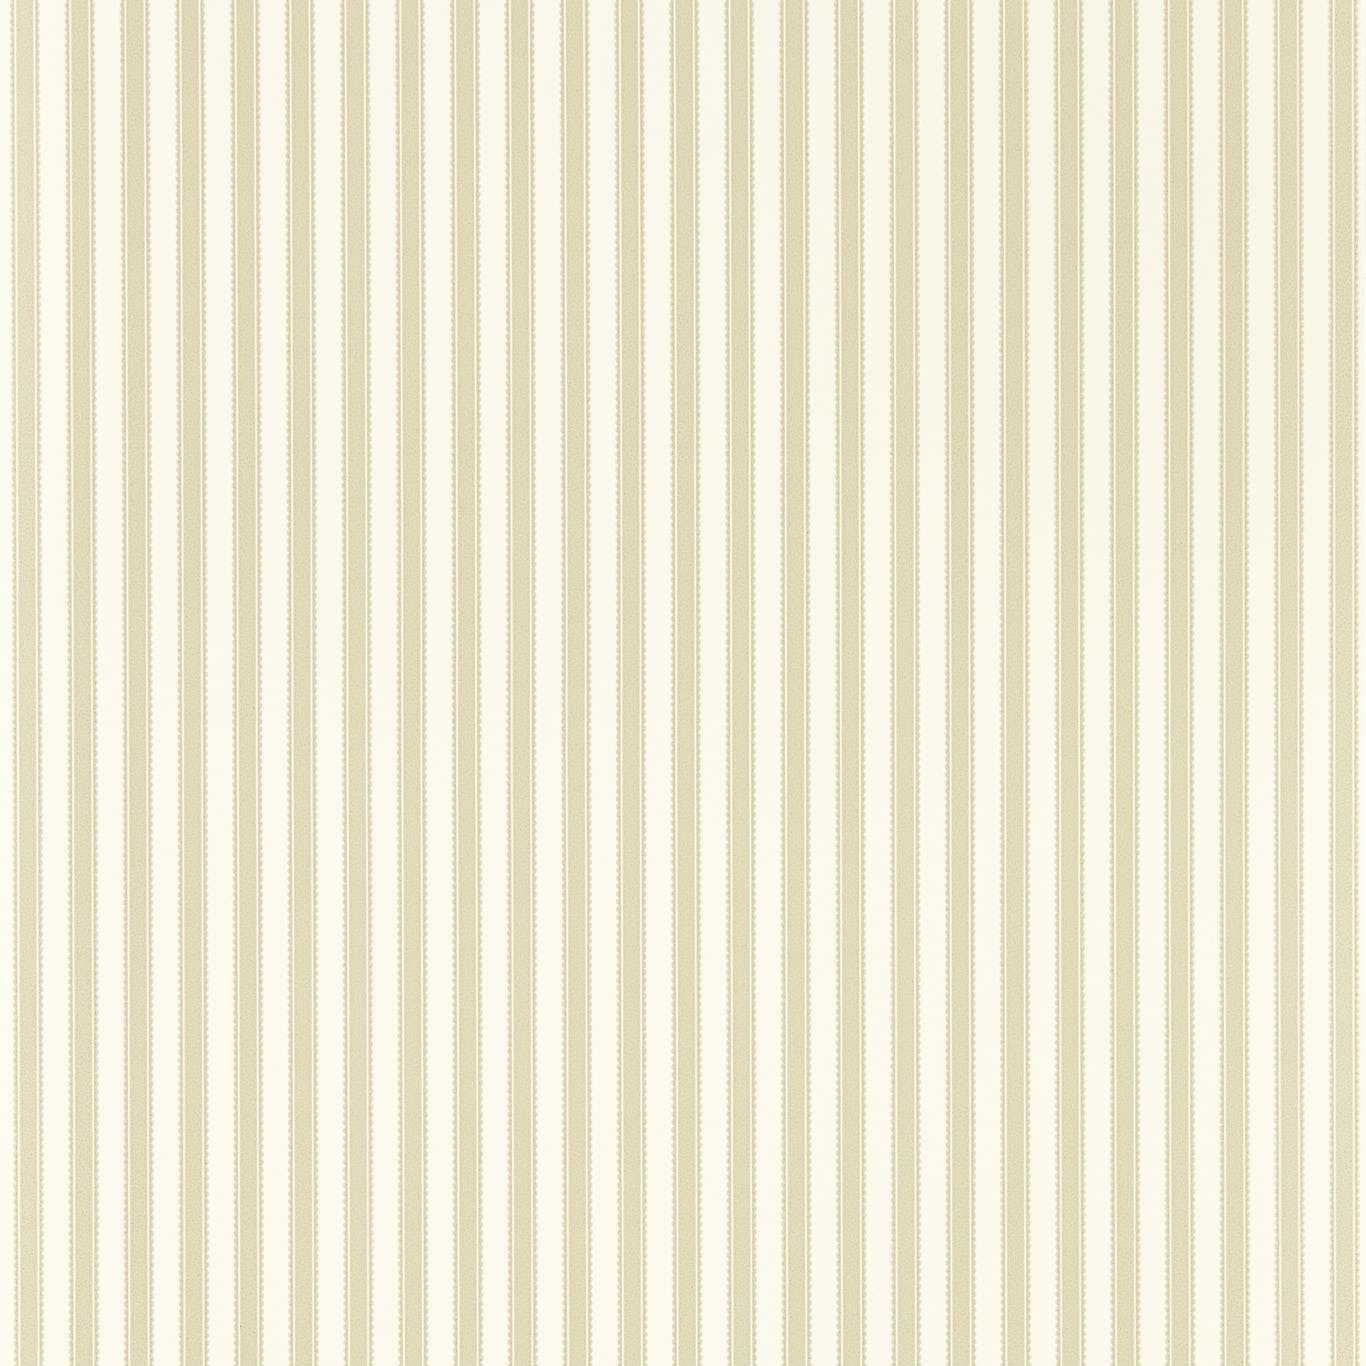 Pinetum Stripe Flax Wallpaper by SAN